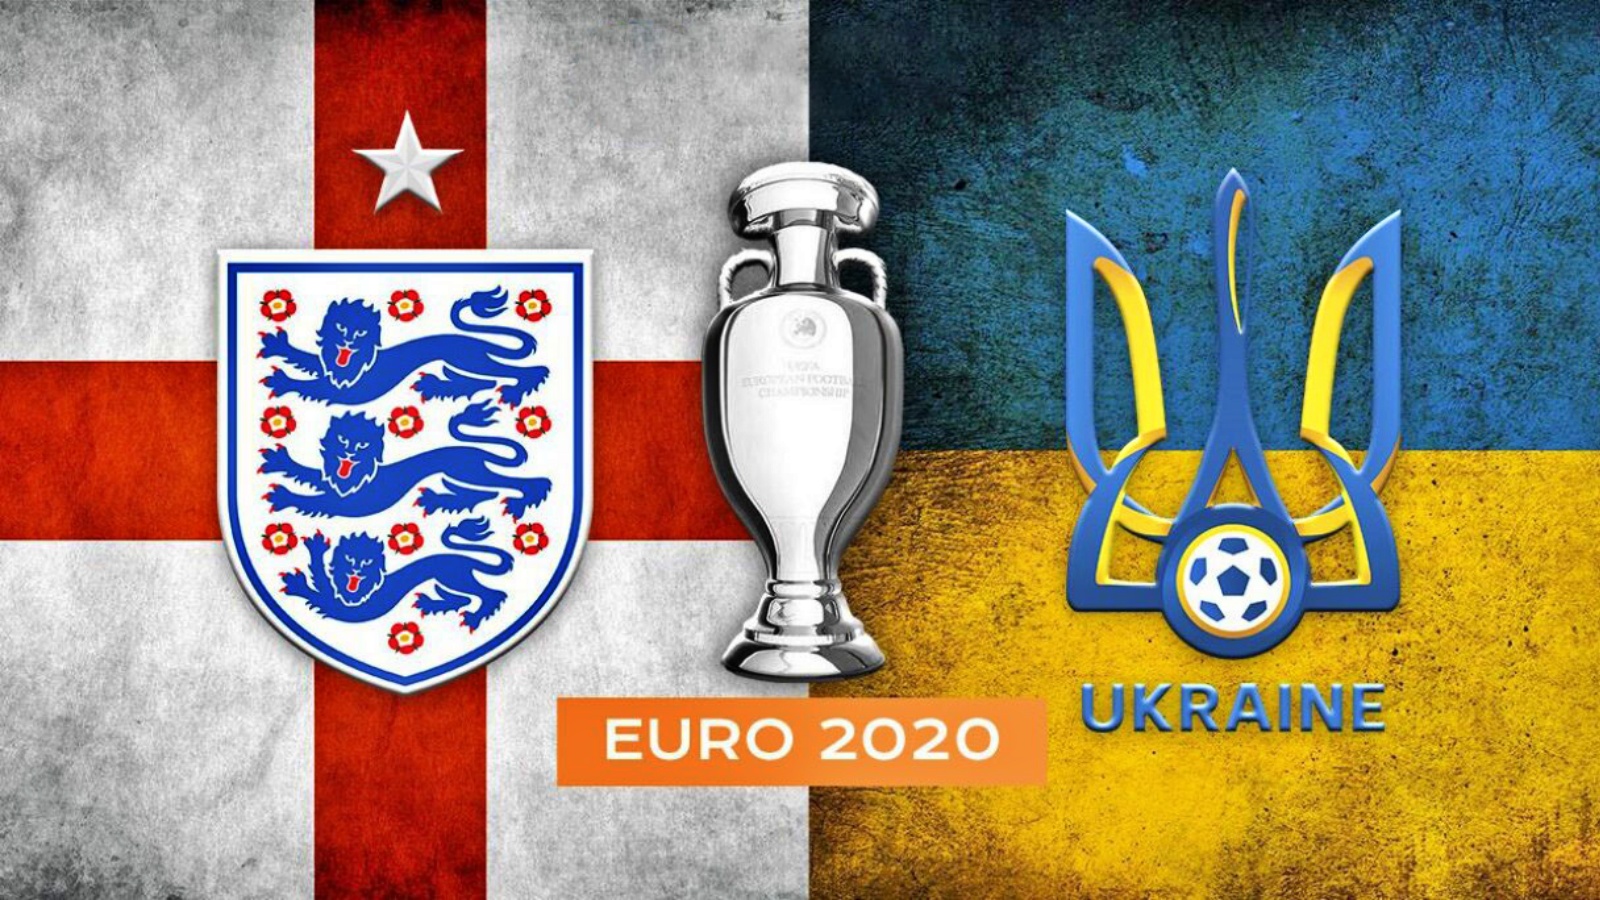 UKRAINE - ENGLAND PRO TV LIVE EURO 2020